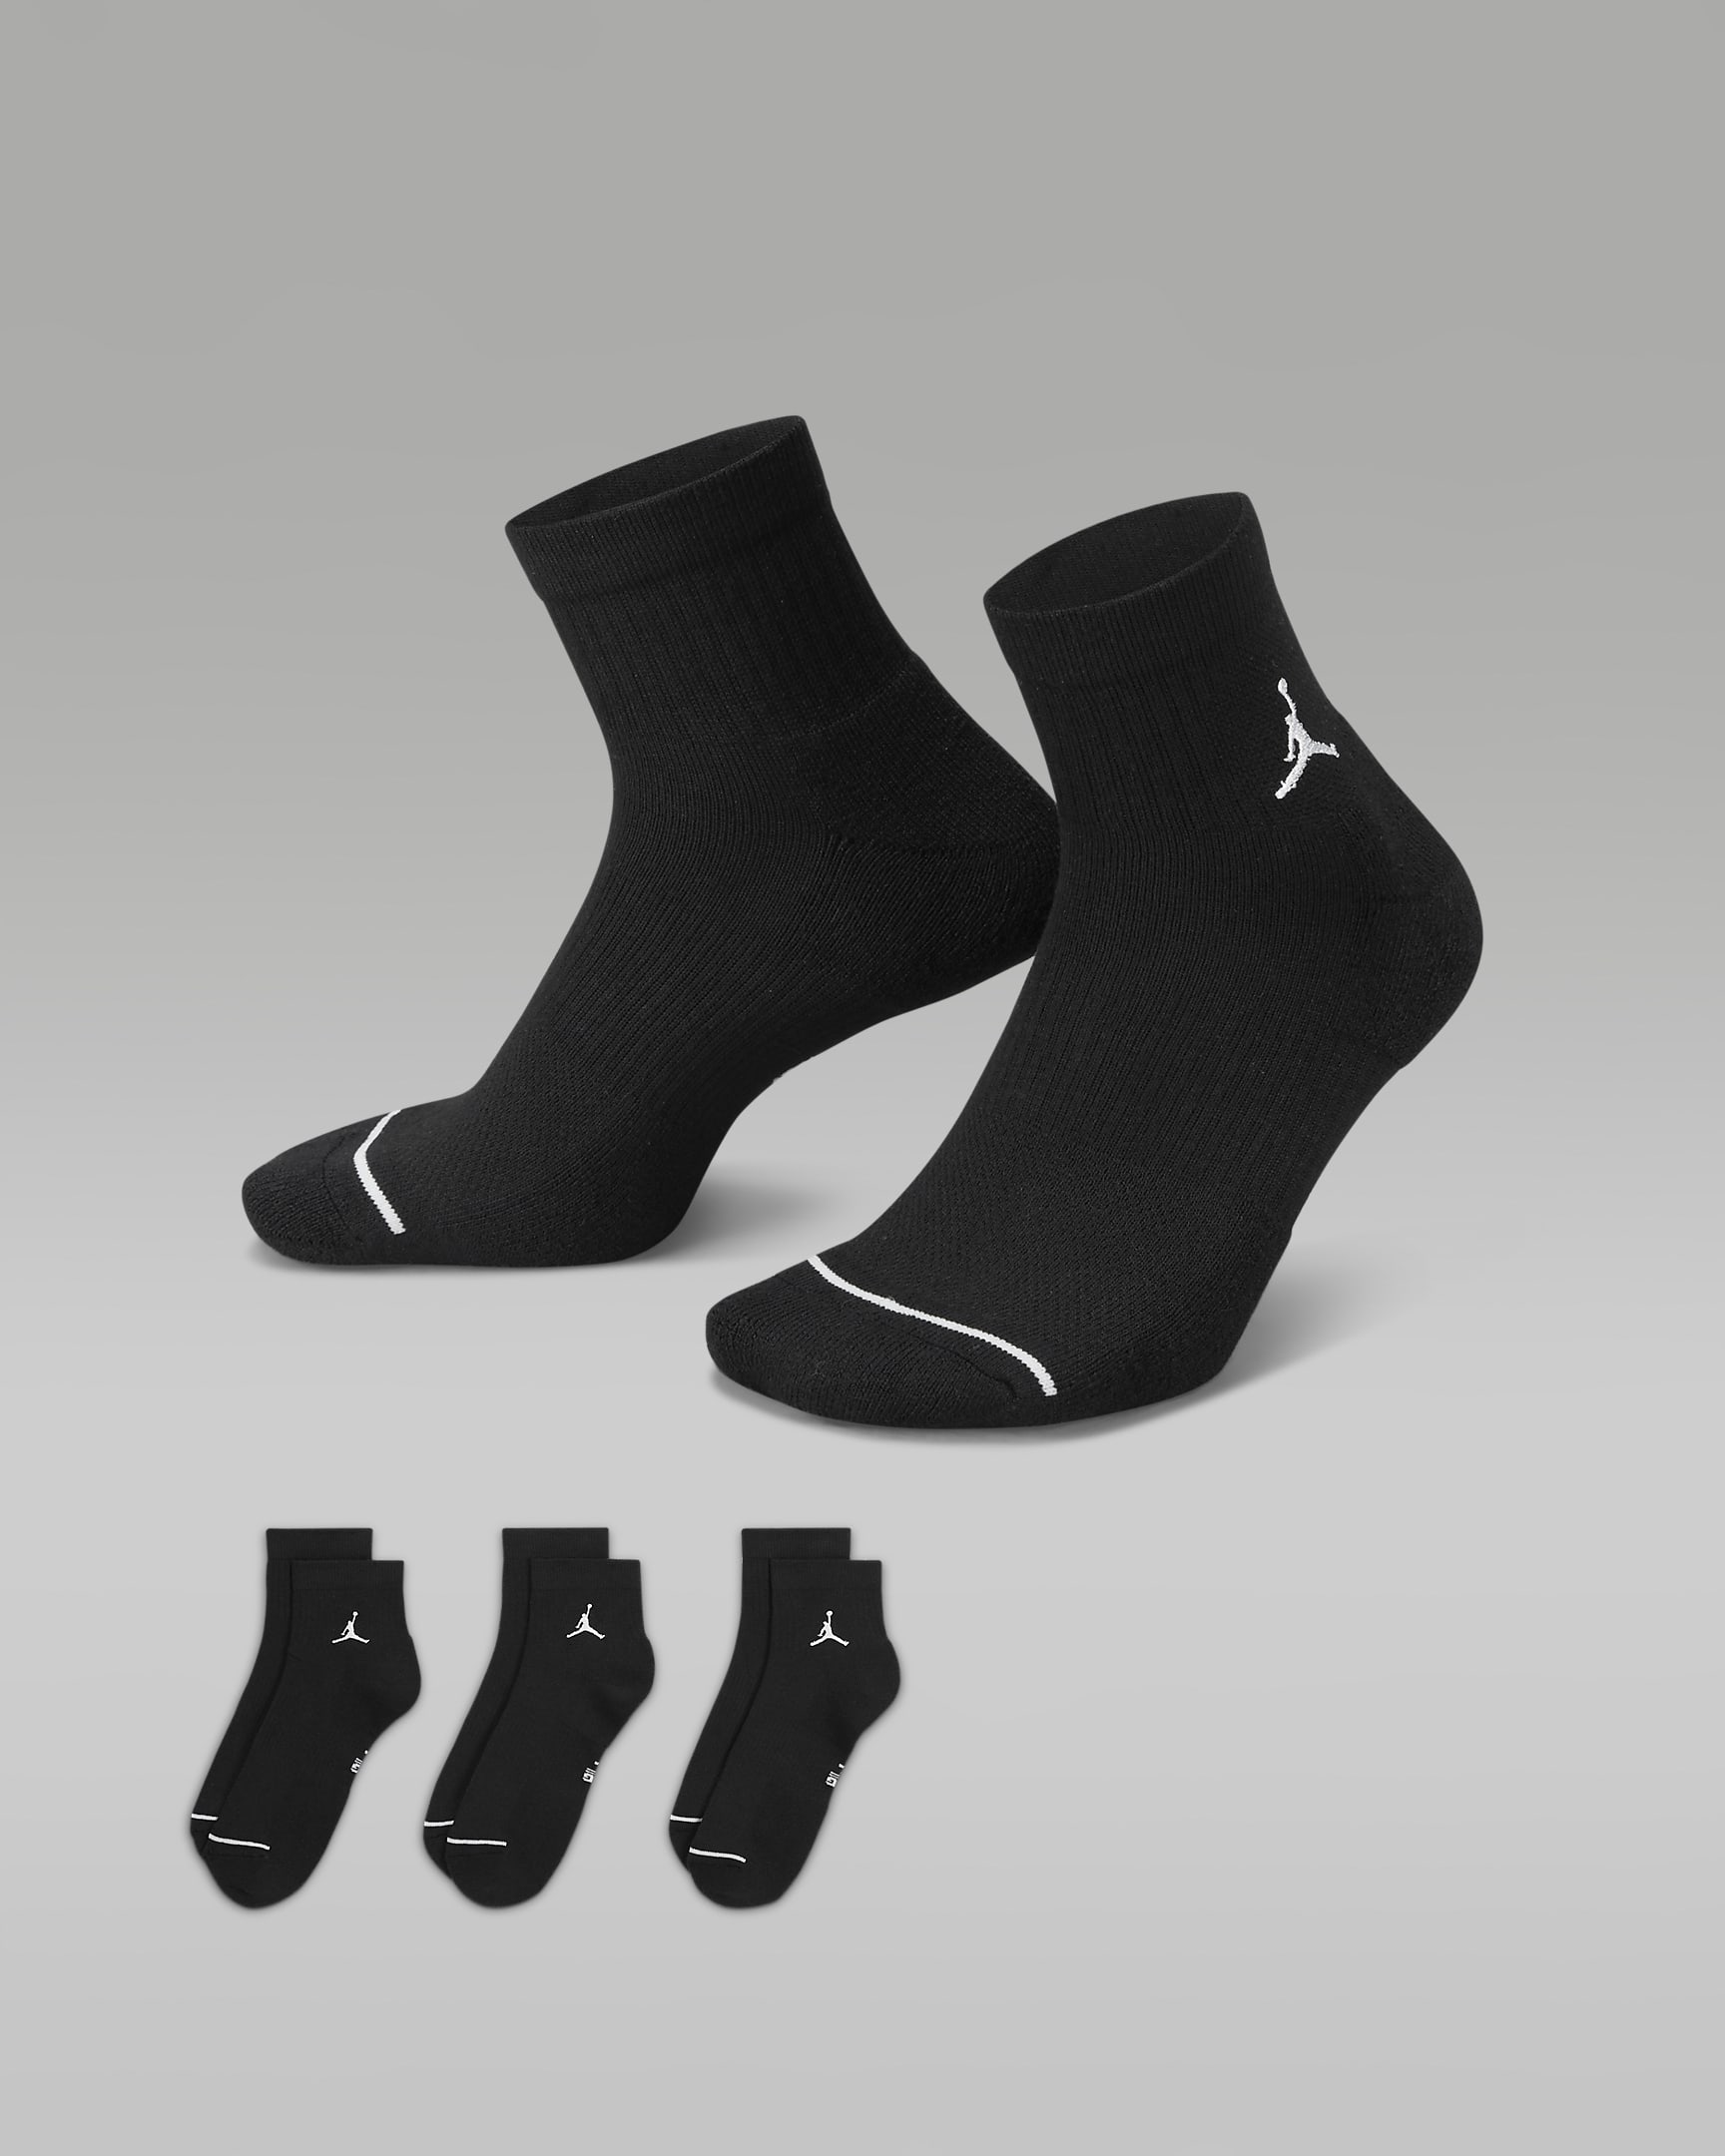 Jordan Everyday Ankle Socks (3 Pairs) - Black/White